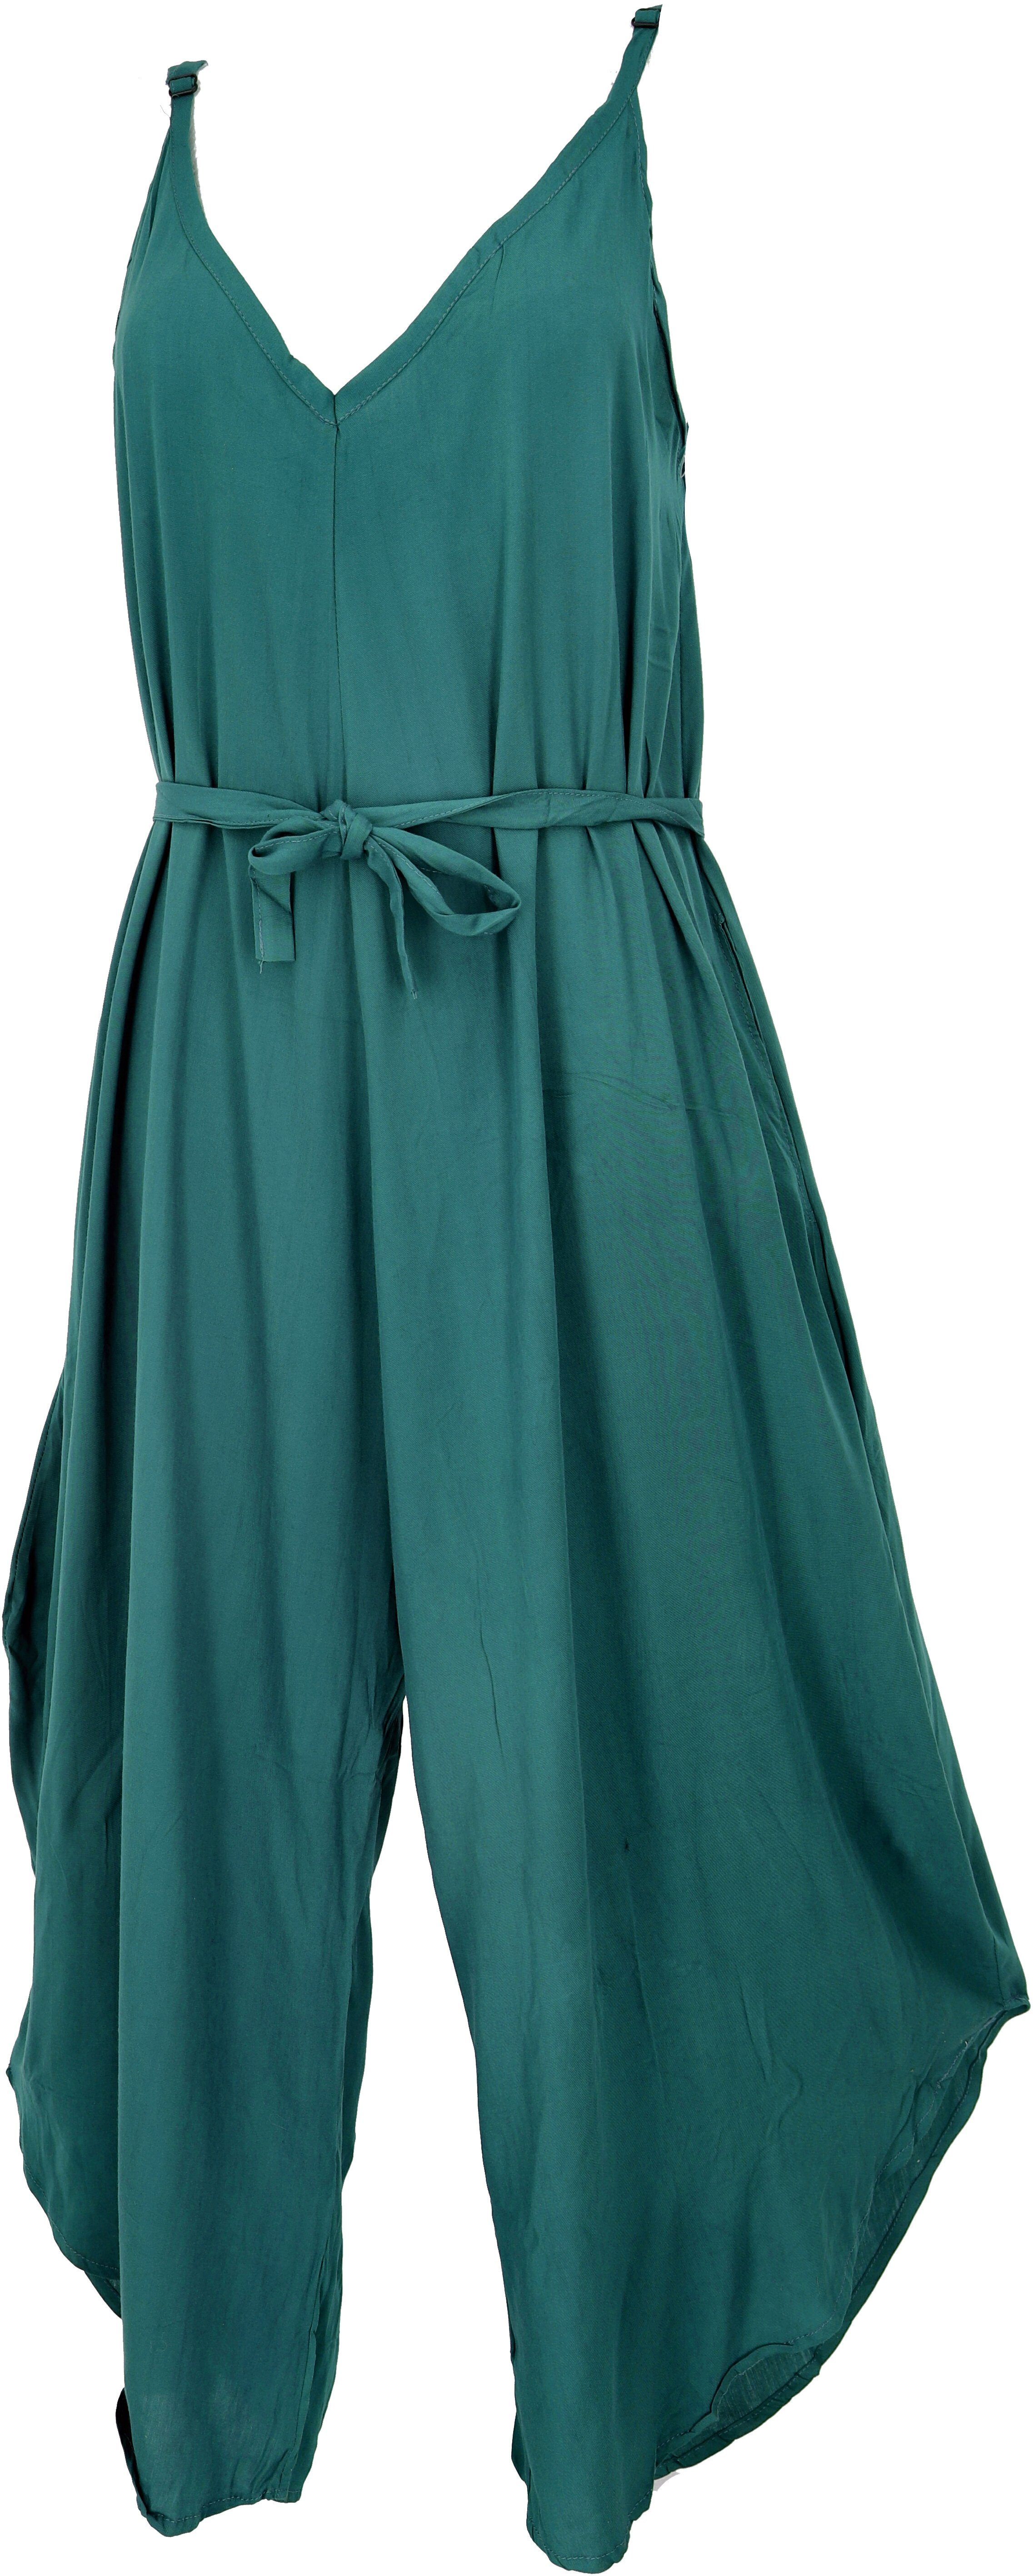 Guru-Shop Jumpsuit, Relaxhose alternative dunkelgrün Bekleidung Sommer Overall,.. Einfarbiger